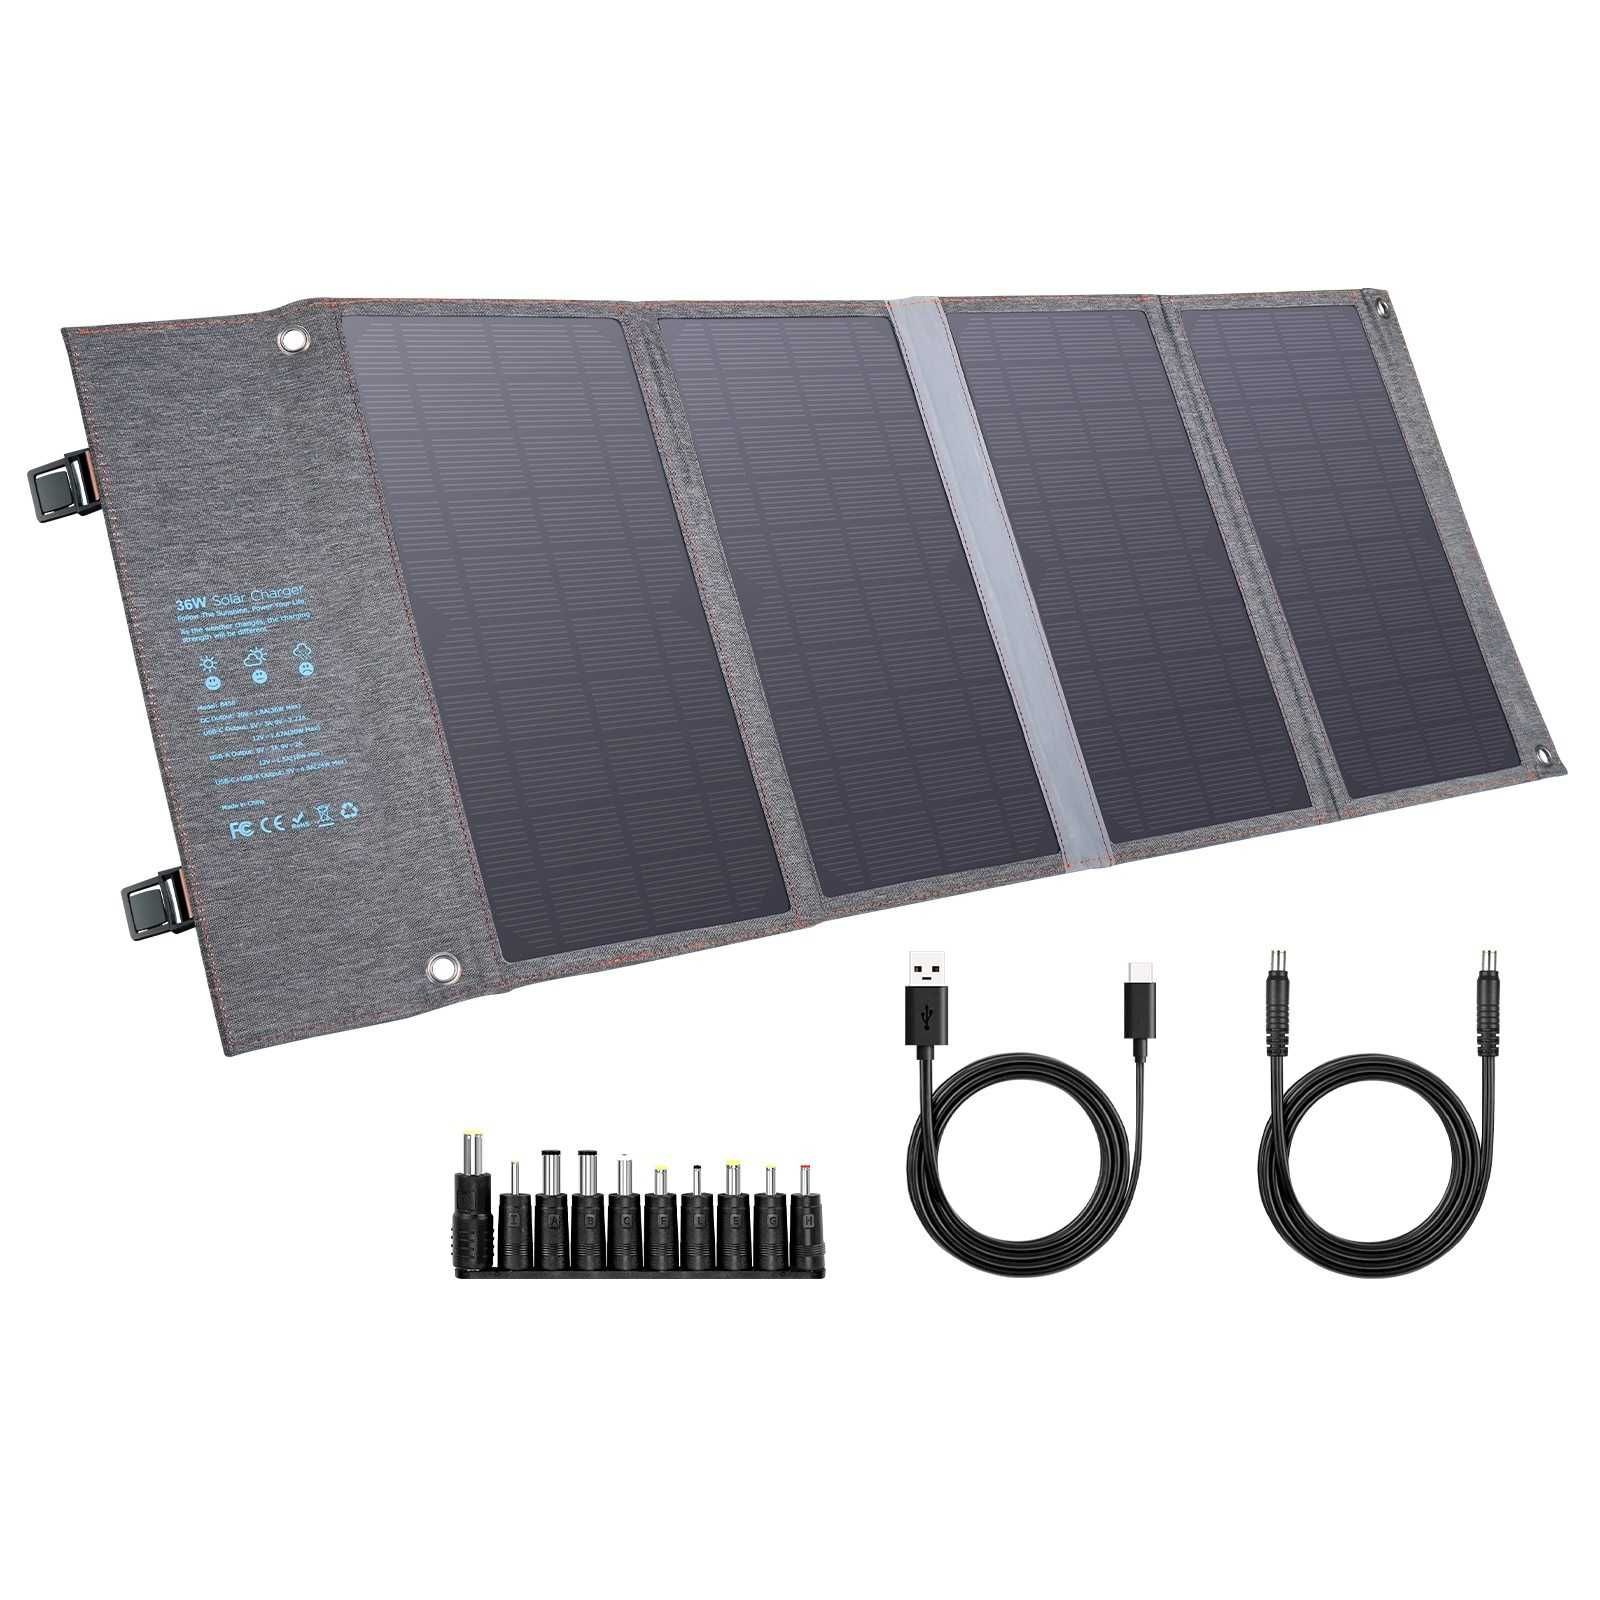 Портативна розкладна сонячна зарядка 36W ALT-36. Солнечная панель